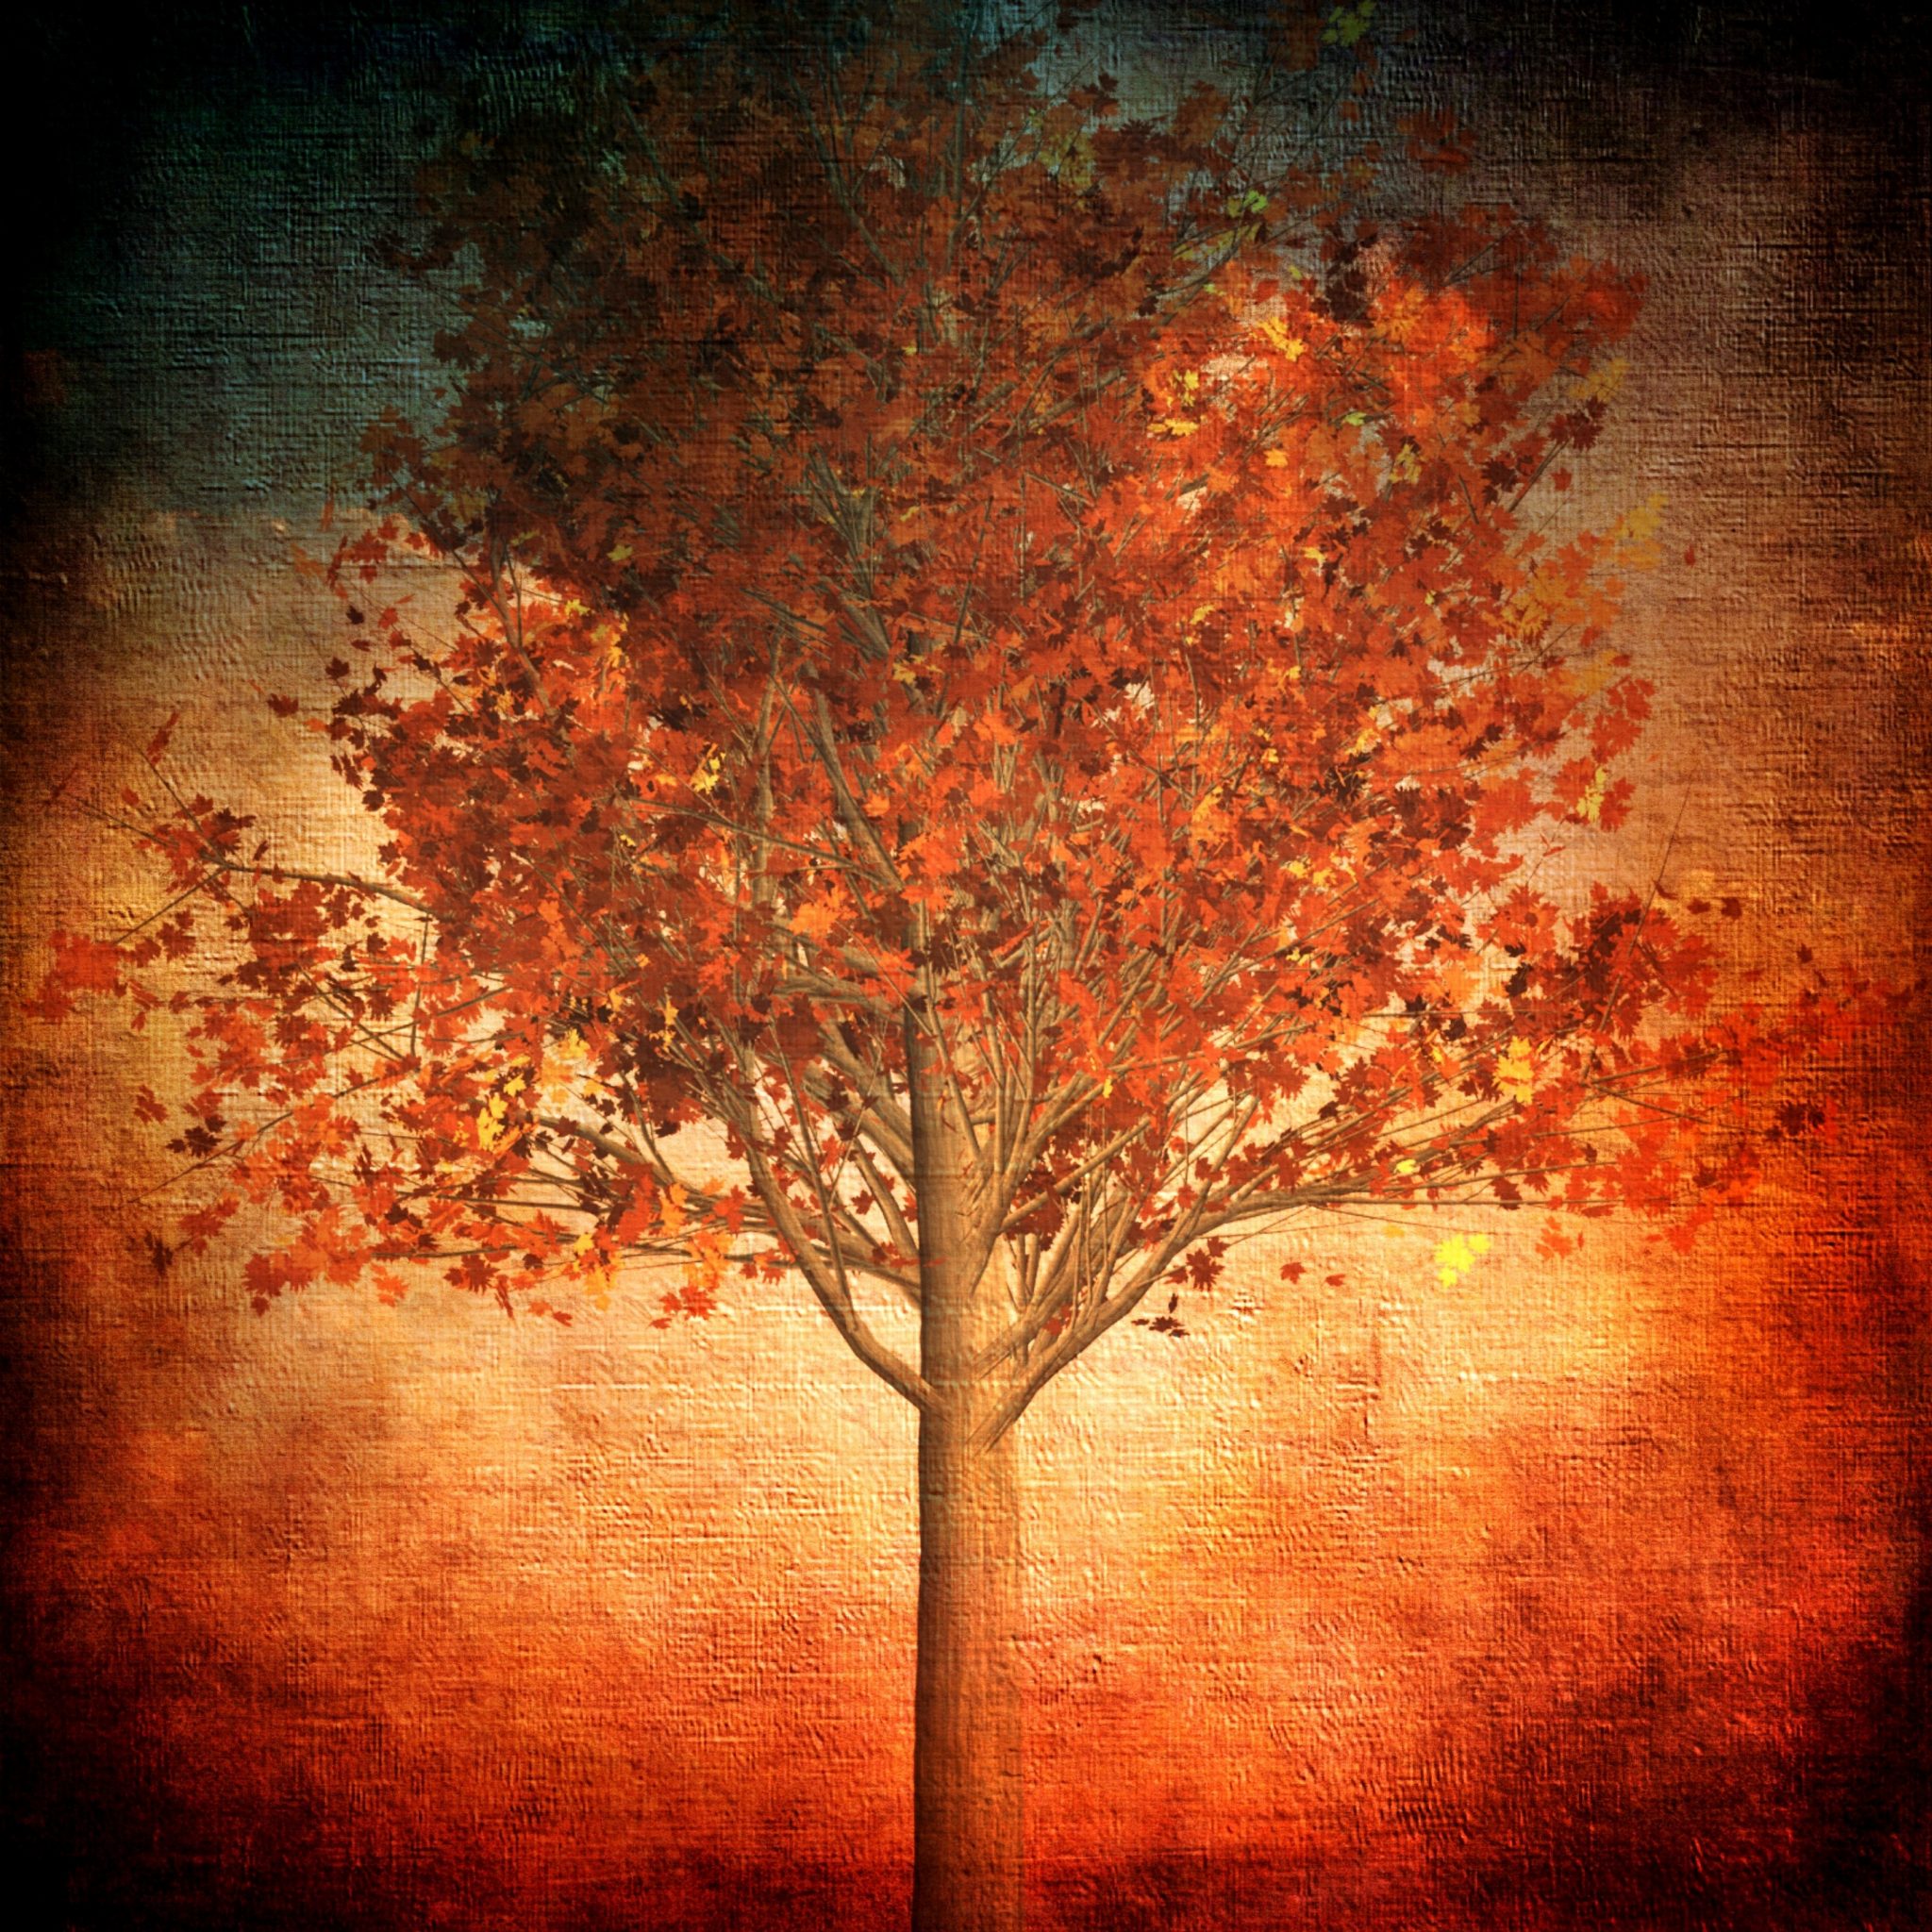 2048x2048 wallpapers iPad retina Aesthetic Autumn Red Fall Leaves Nature iPad Wallpaper 2048x2048 pixels resolution